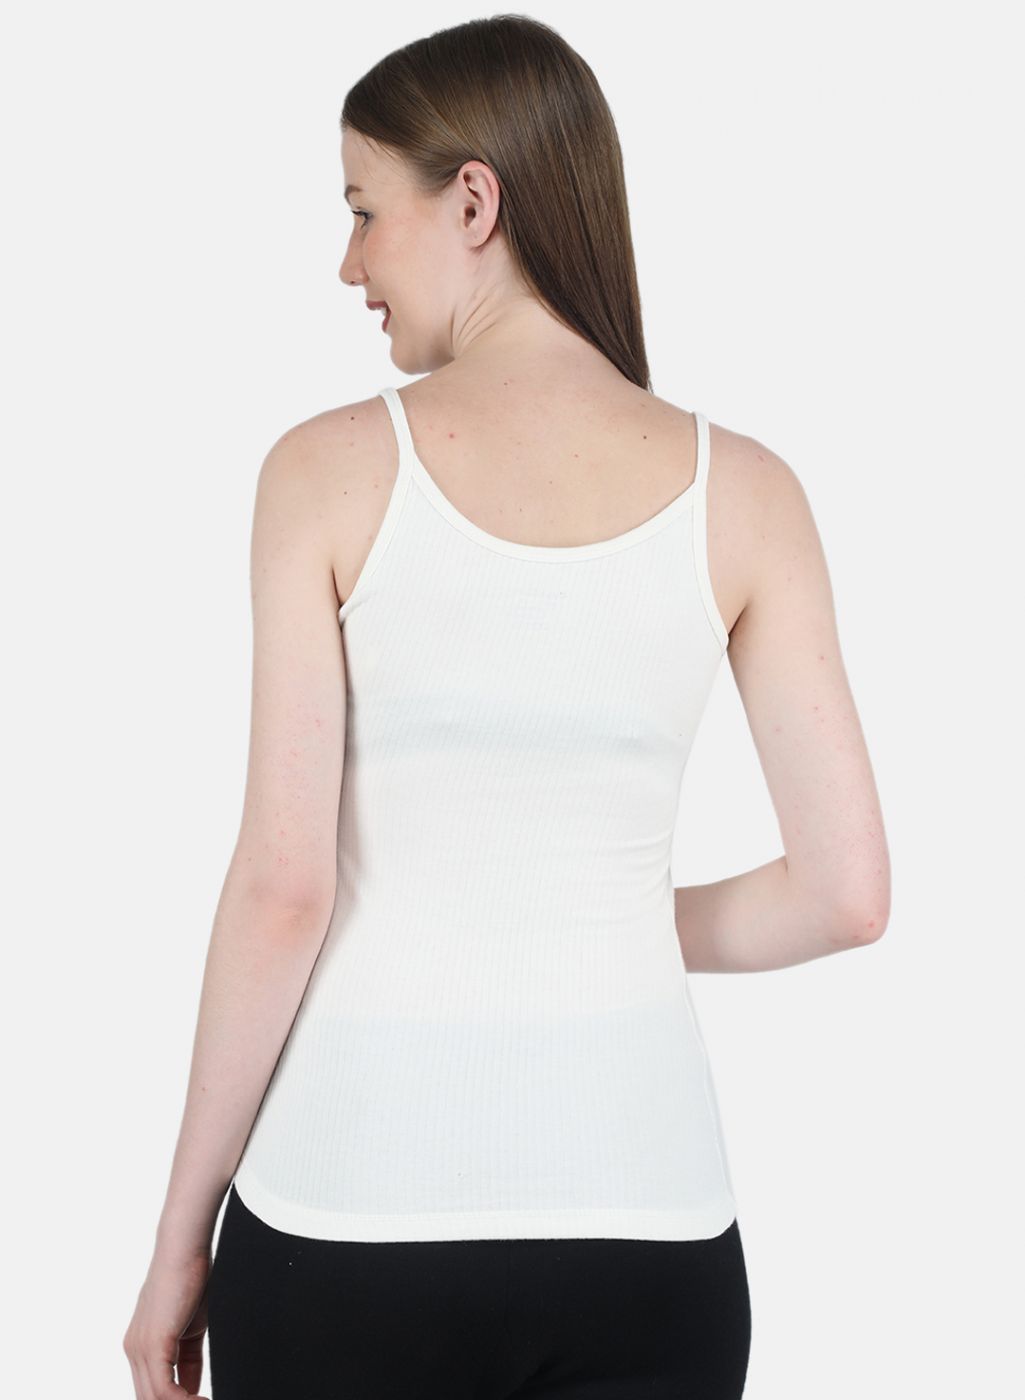 Buy Women White Camisoles online in India